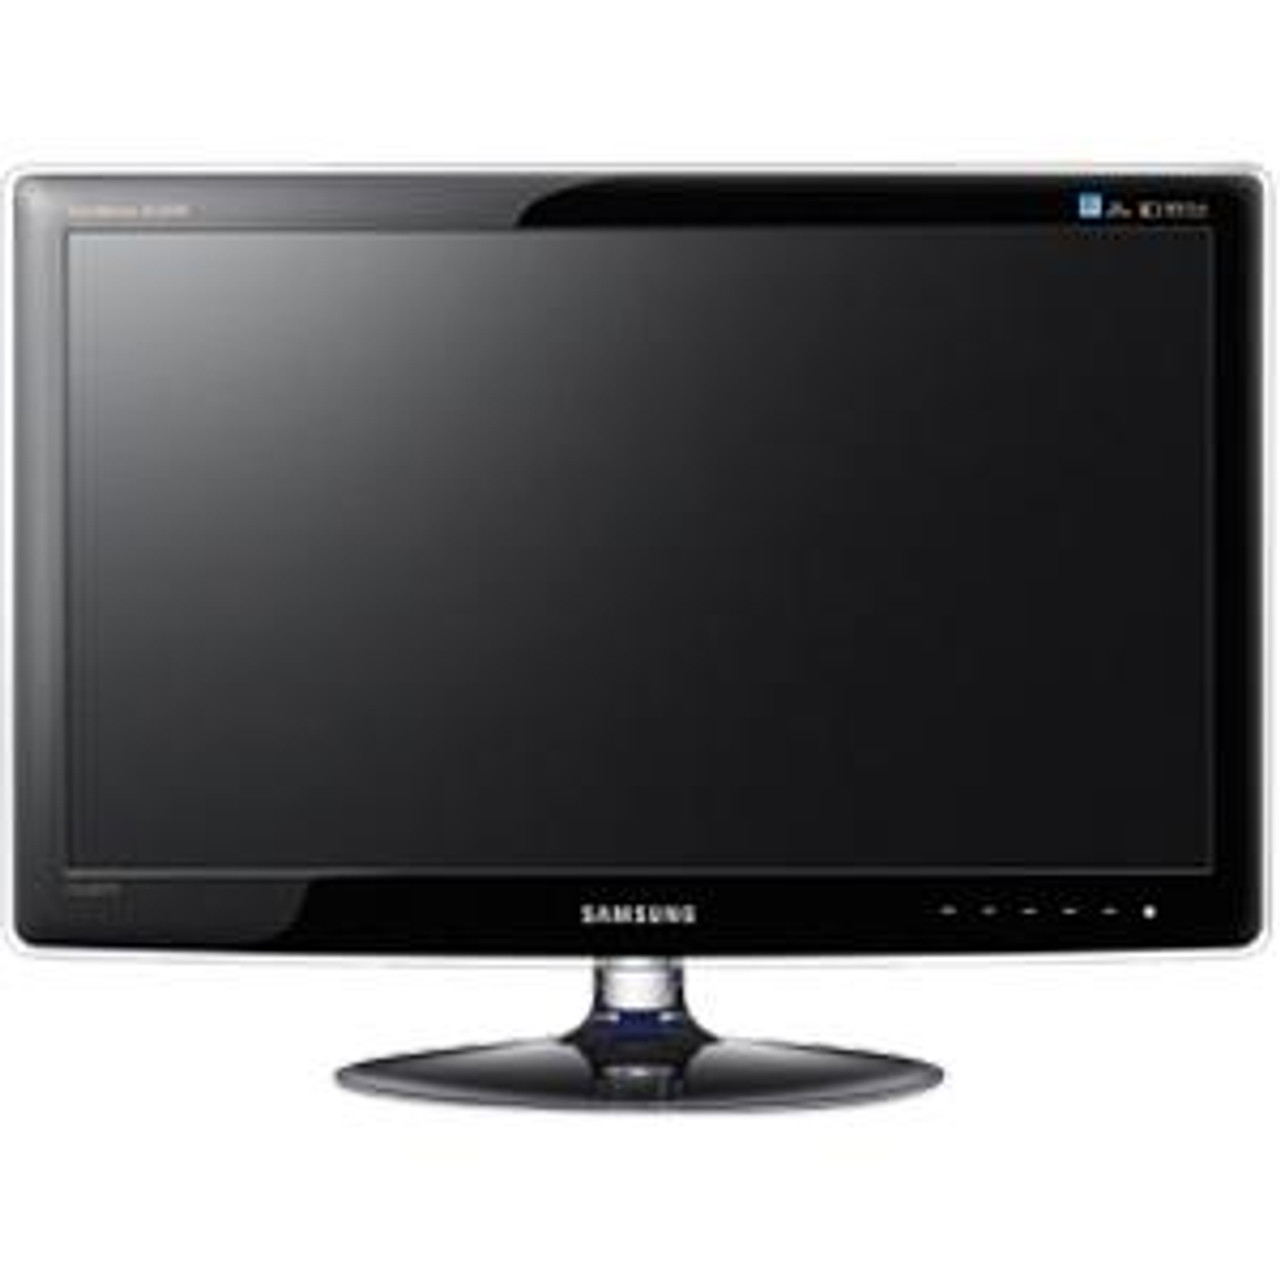 XL2370-1 - Samsung XL2370 23 LCD Monitor 16:9 2 ms 1920 x 1080 16.7 Million Colors 250 Nit 1000:1 DVI HDMI Charcoal Gray (Refurbished)